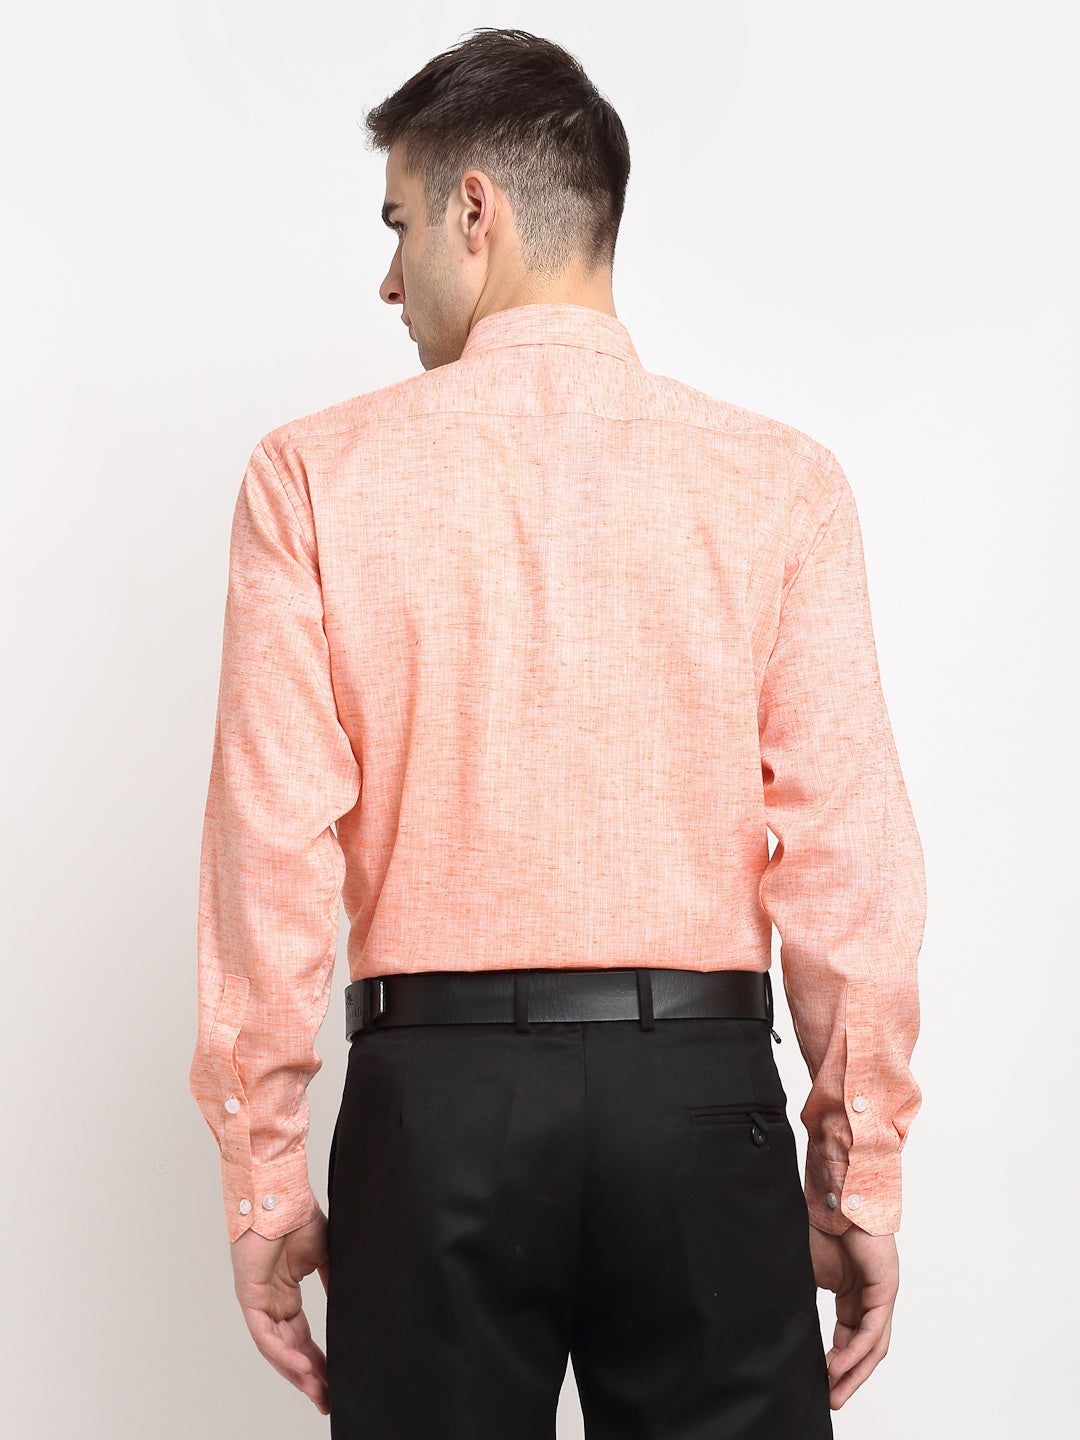 Men's Orange Solid Cotton Formal Shirt ( SF 782Orange ) - Jainish